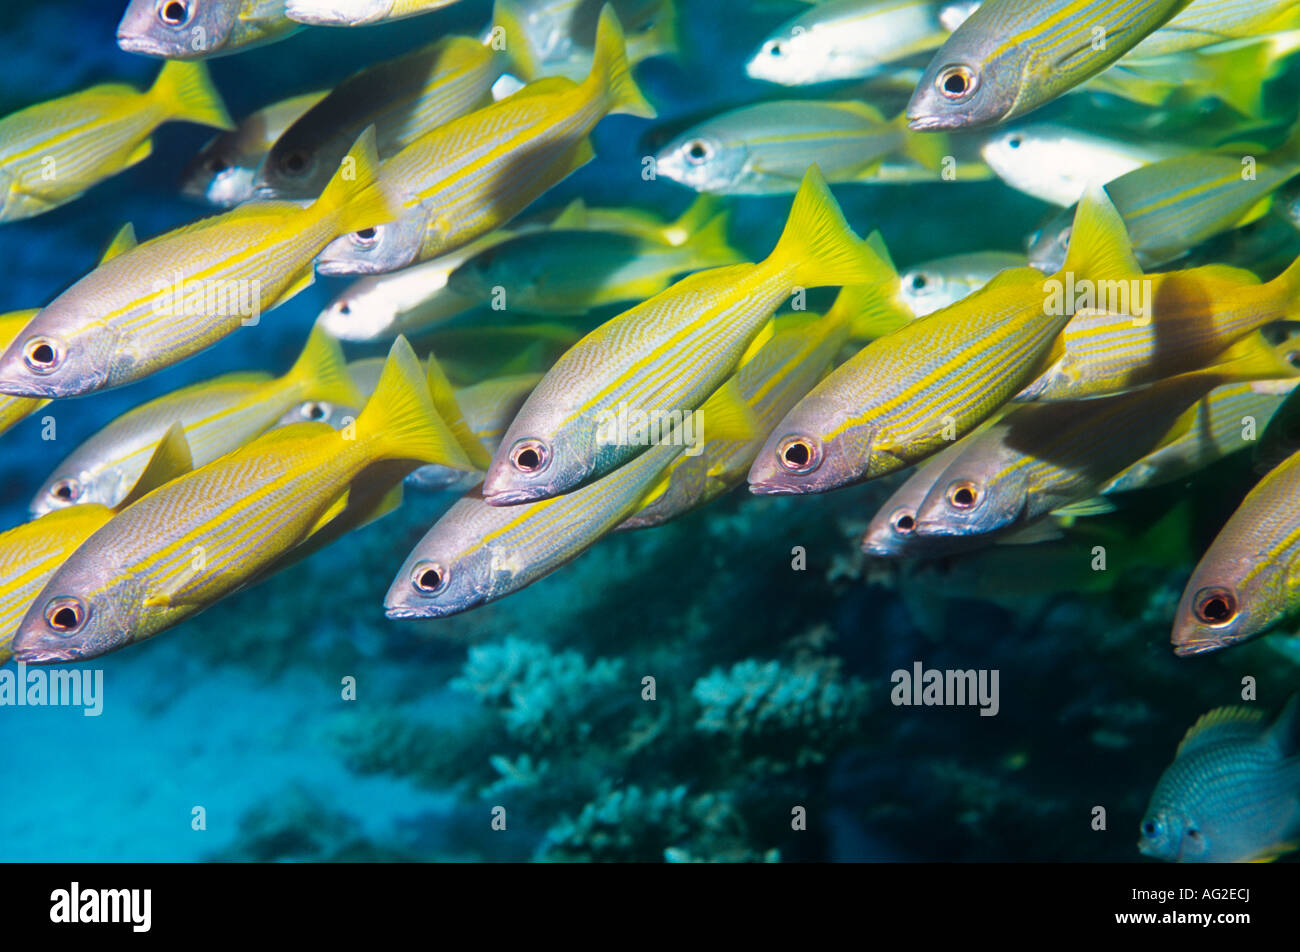 School of tropical fish in ocean Stock Photo